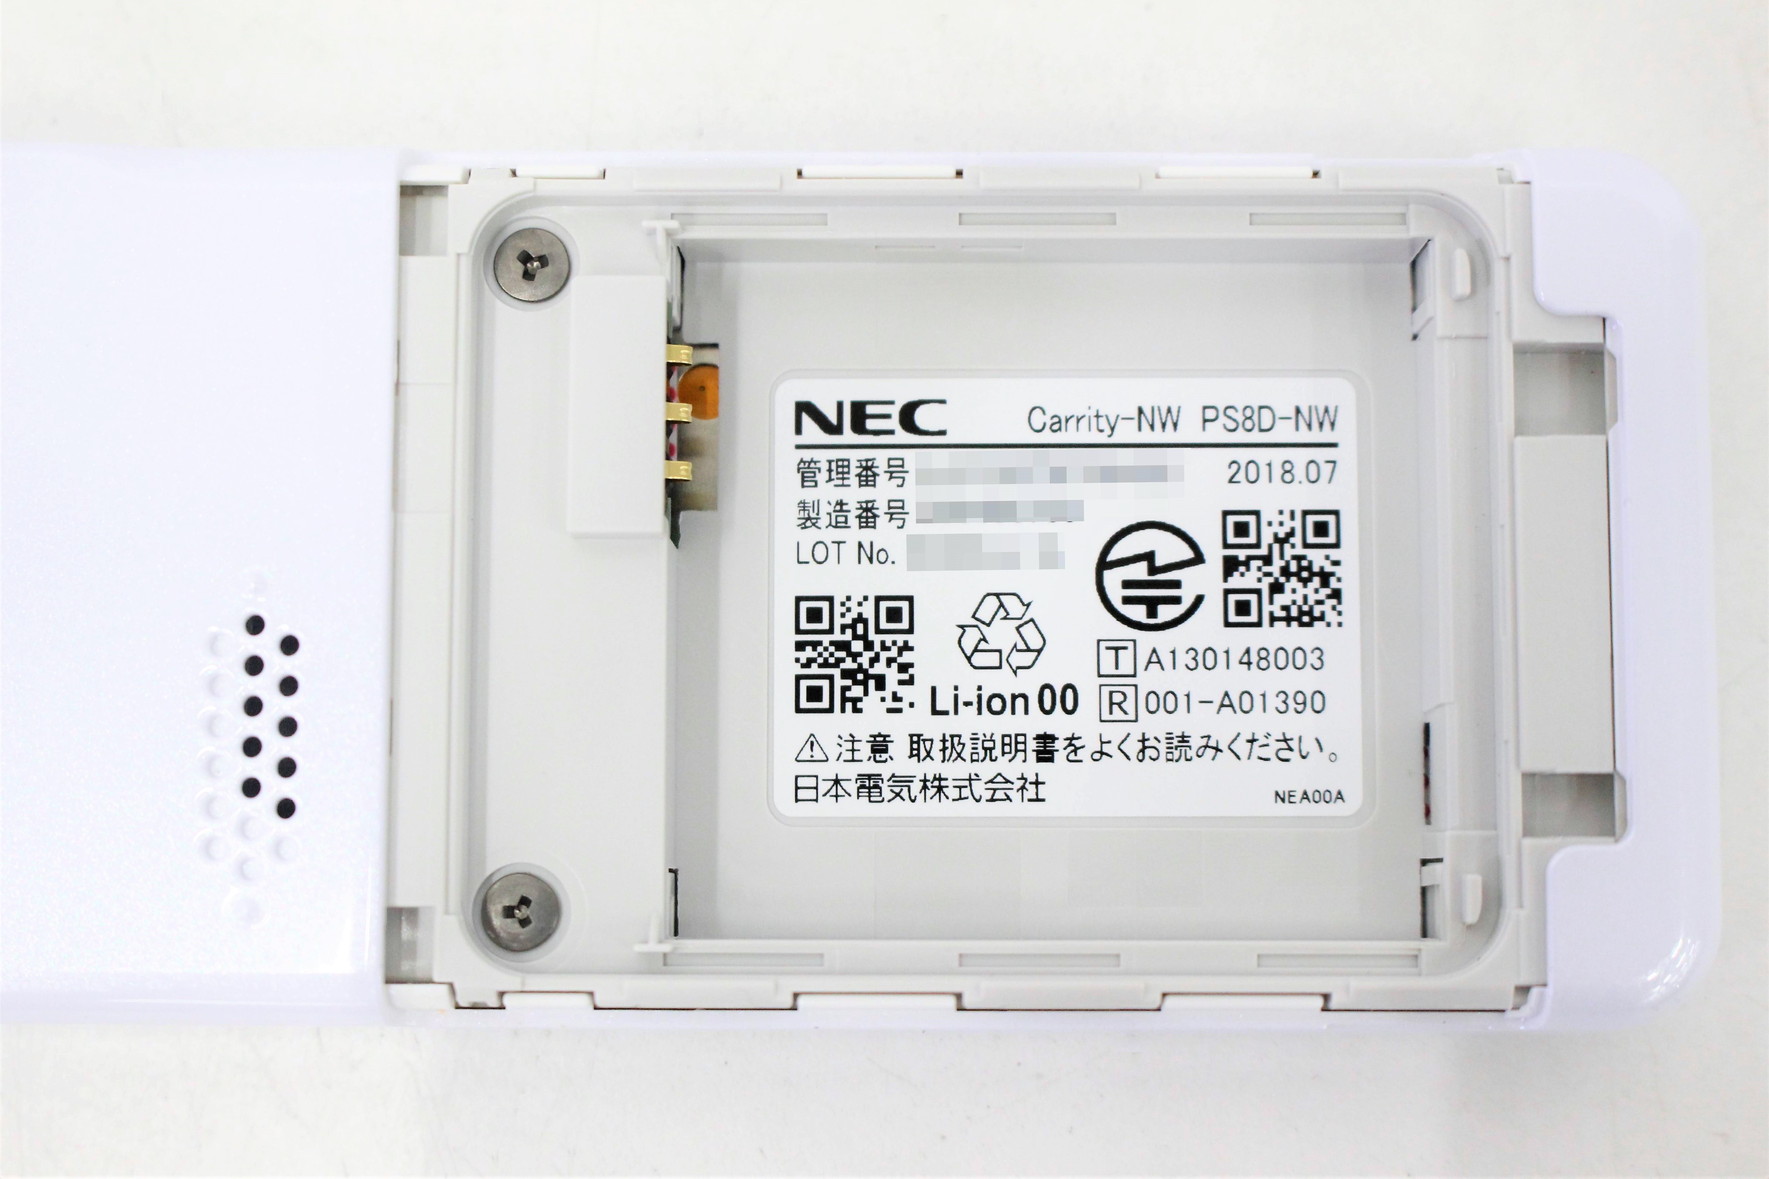 PS8D-NW　Carrity-NW NEC製　デジタルコードレス電話機